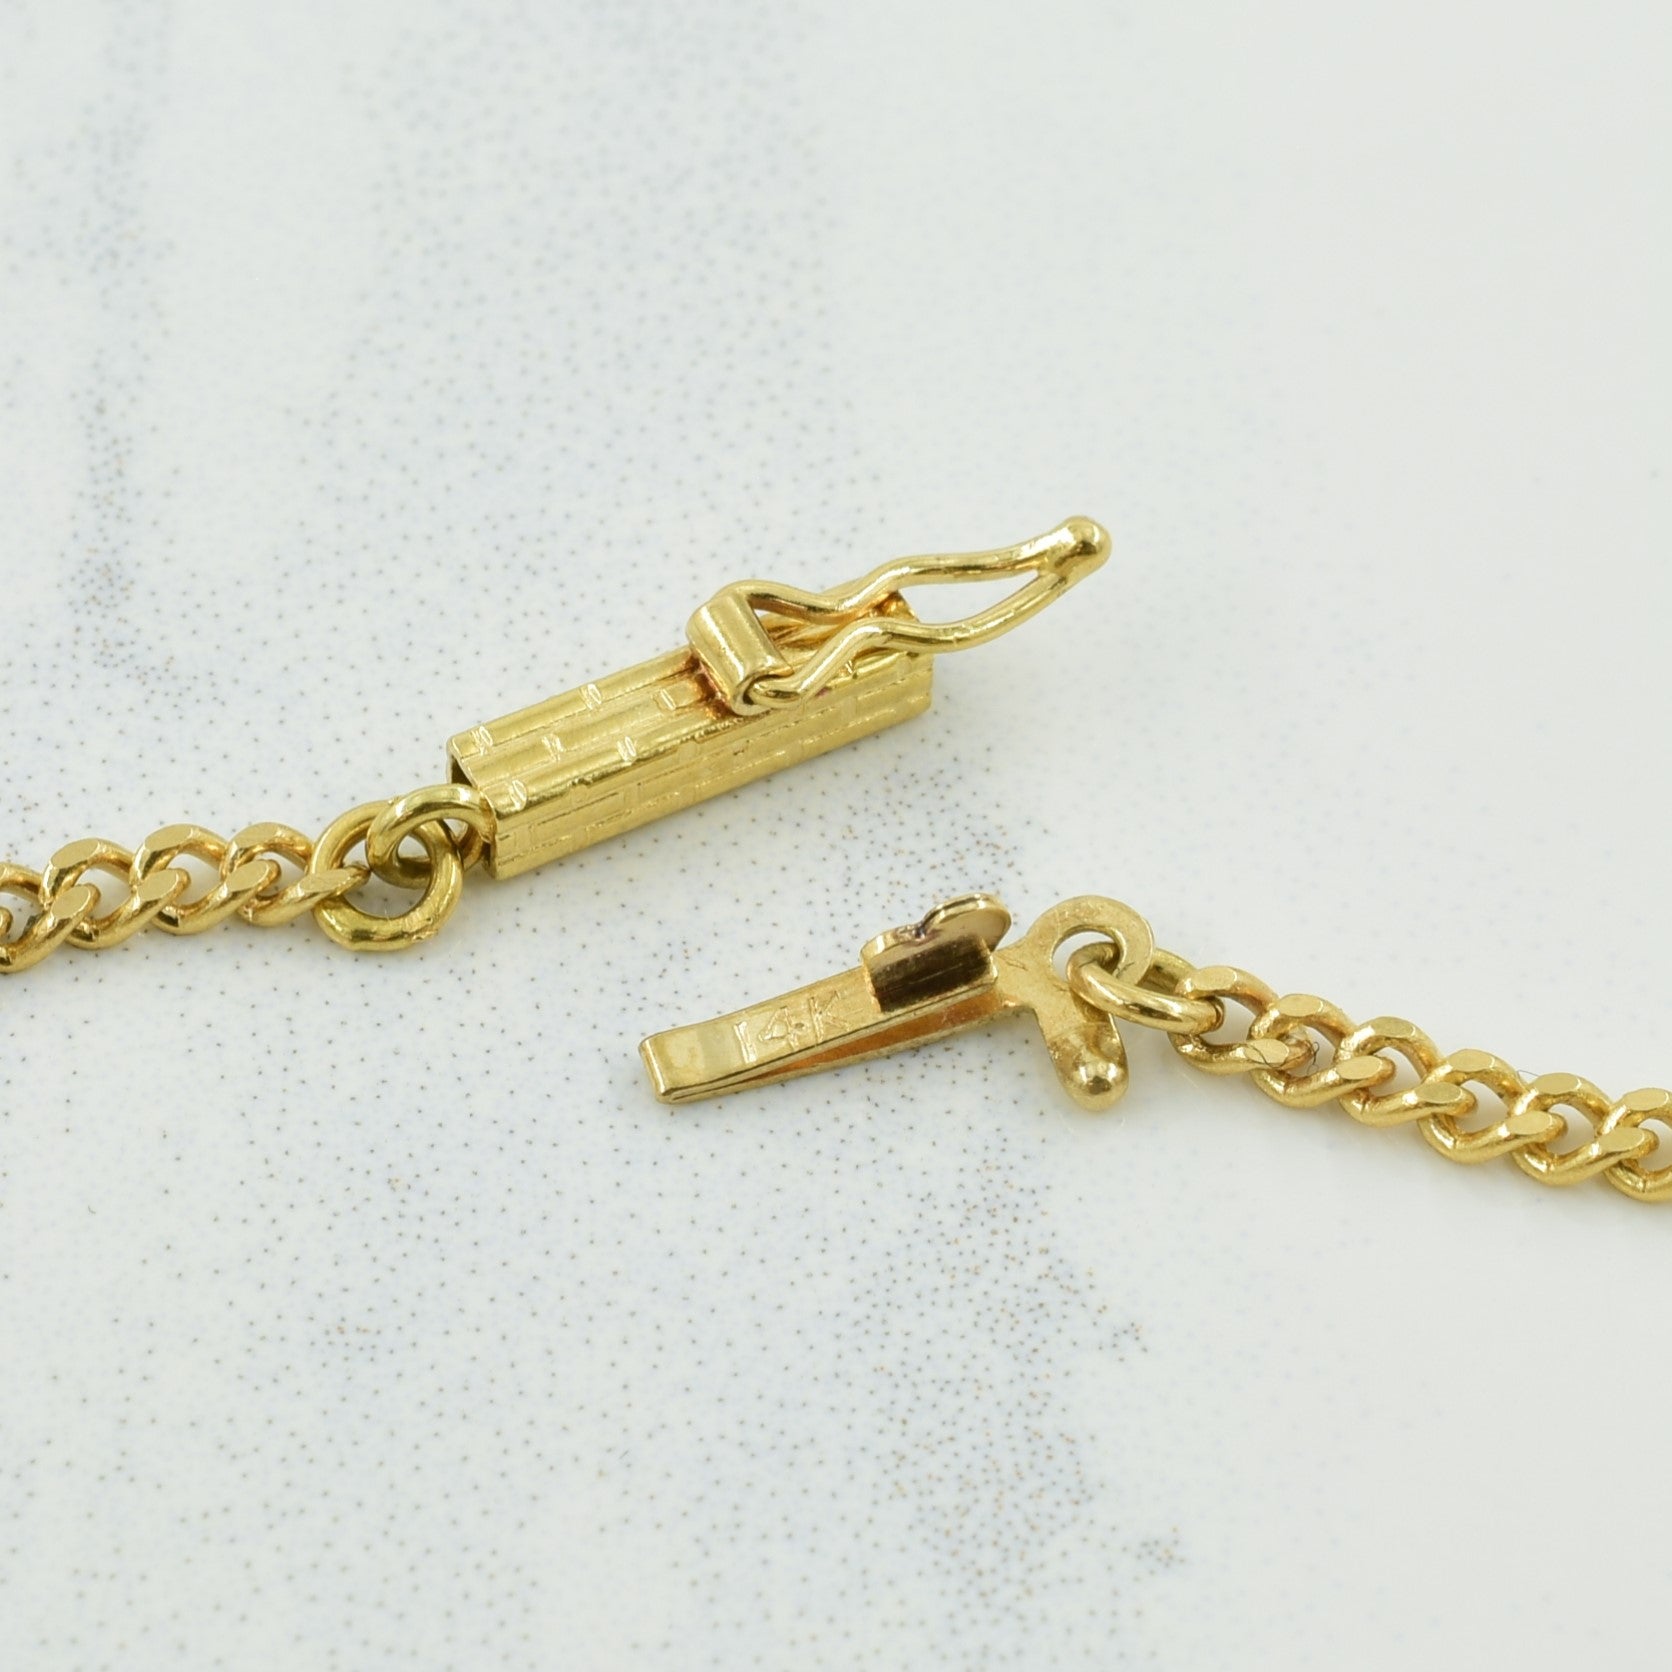 14k Yellow Gold Diamond Bracelet | 0.09ctw | 7